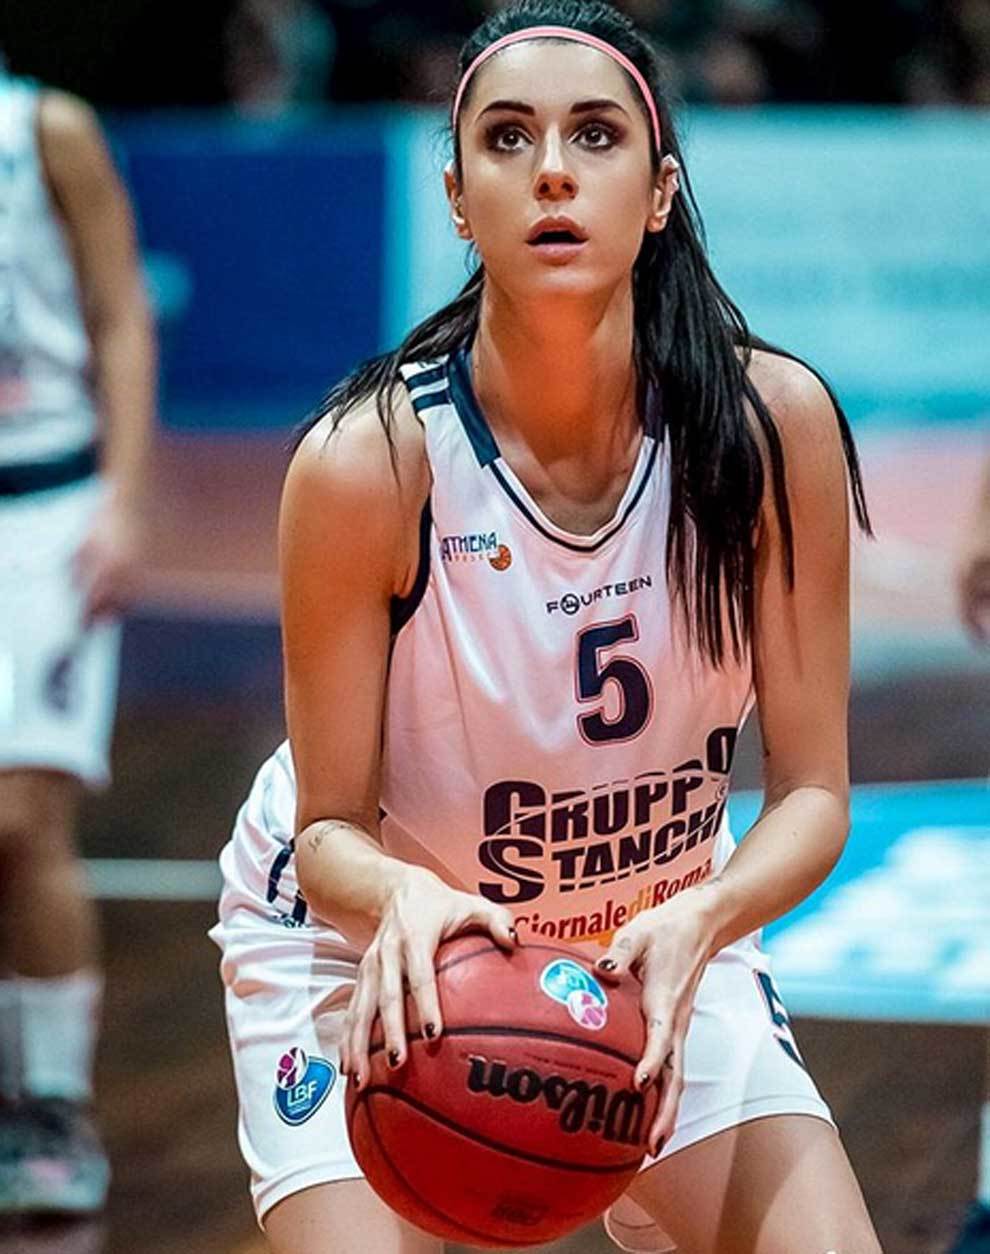 Basketball: Valentina vignali, one of the most beautiful... | MARCA English